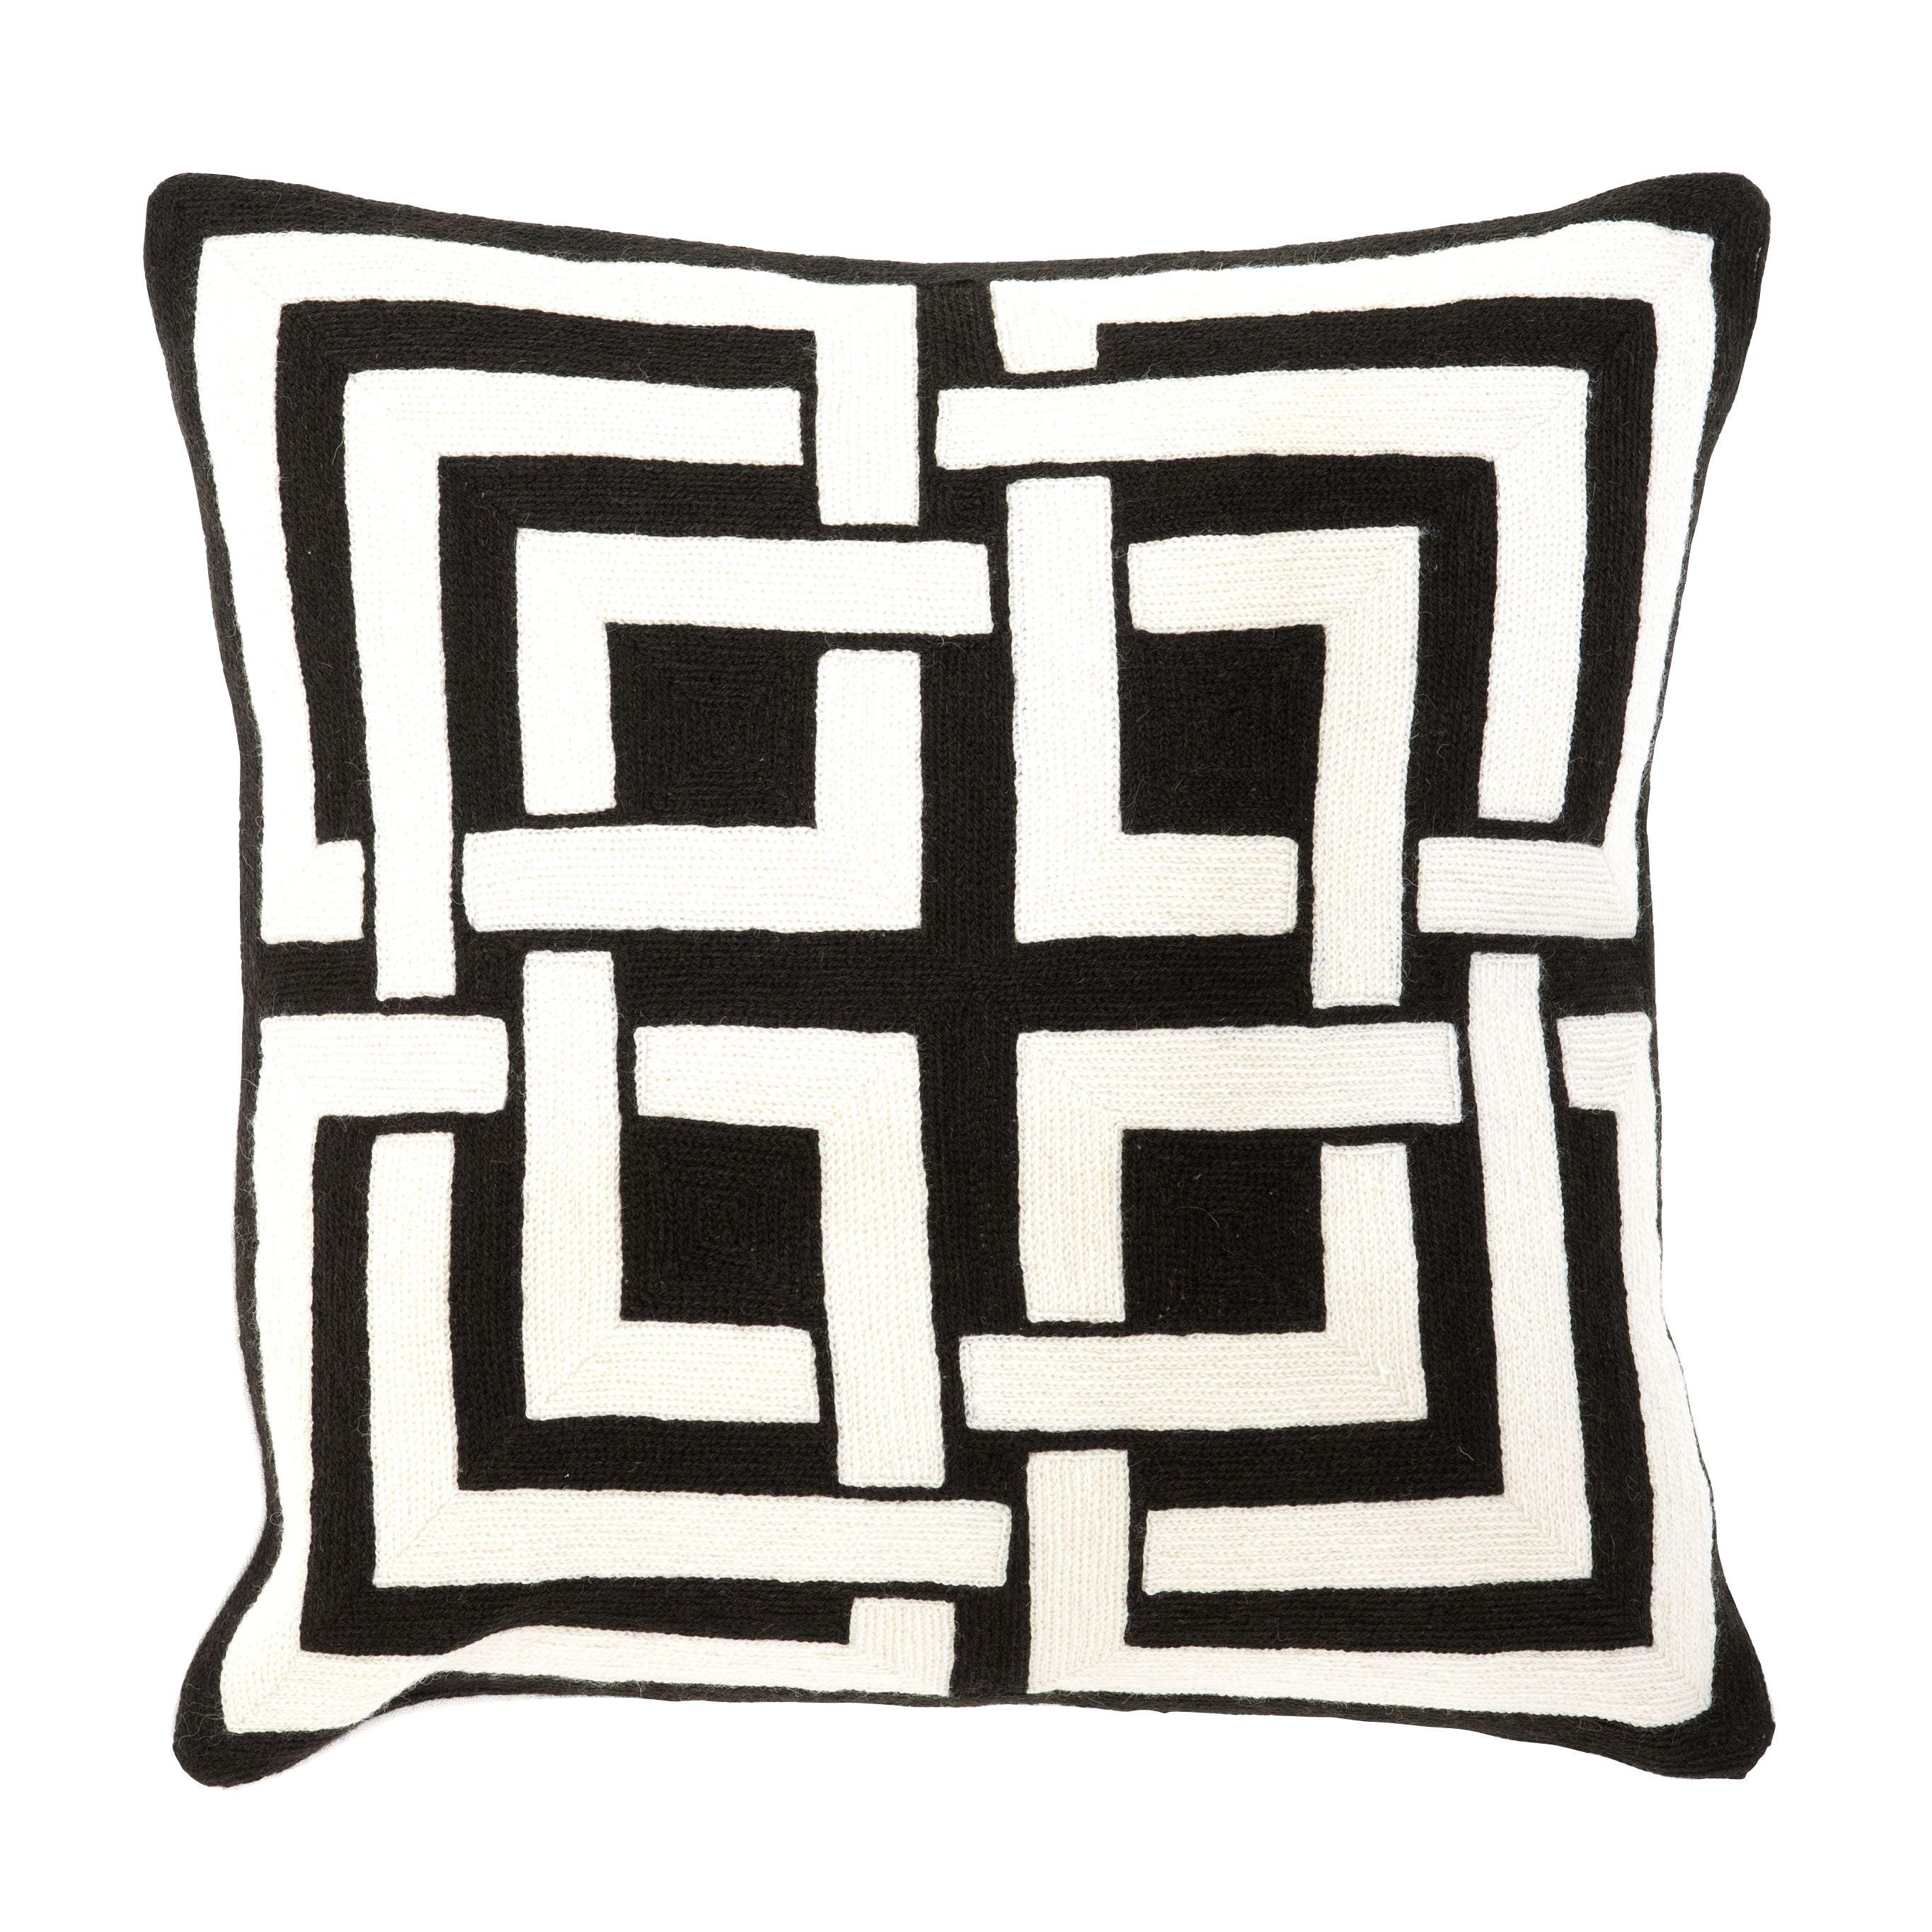 Купить Декоративная подушка Cushion Blakes в интернет-магазине roooms.ru